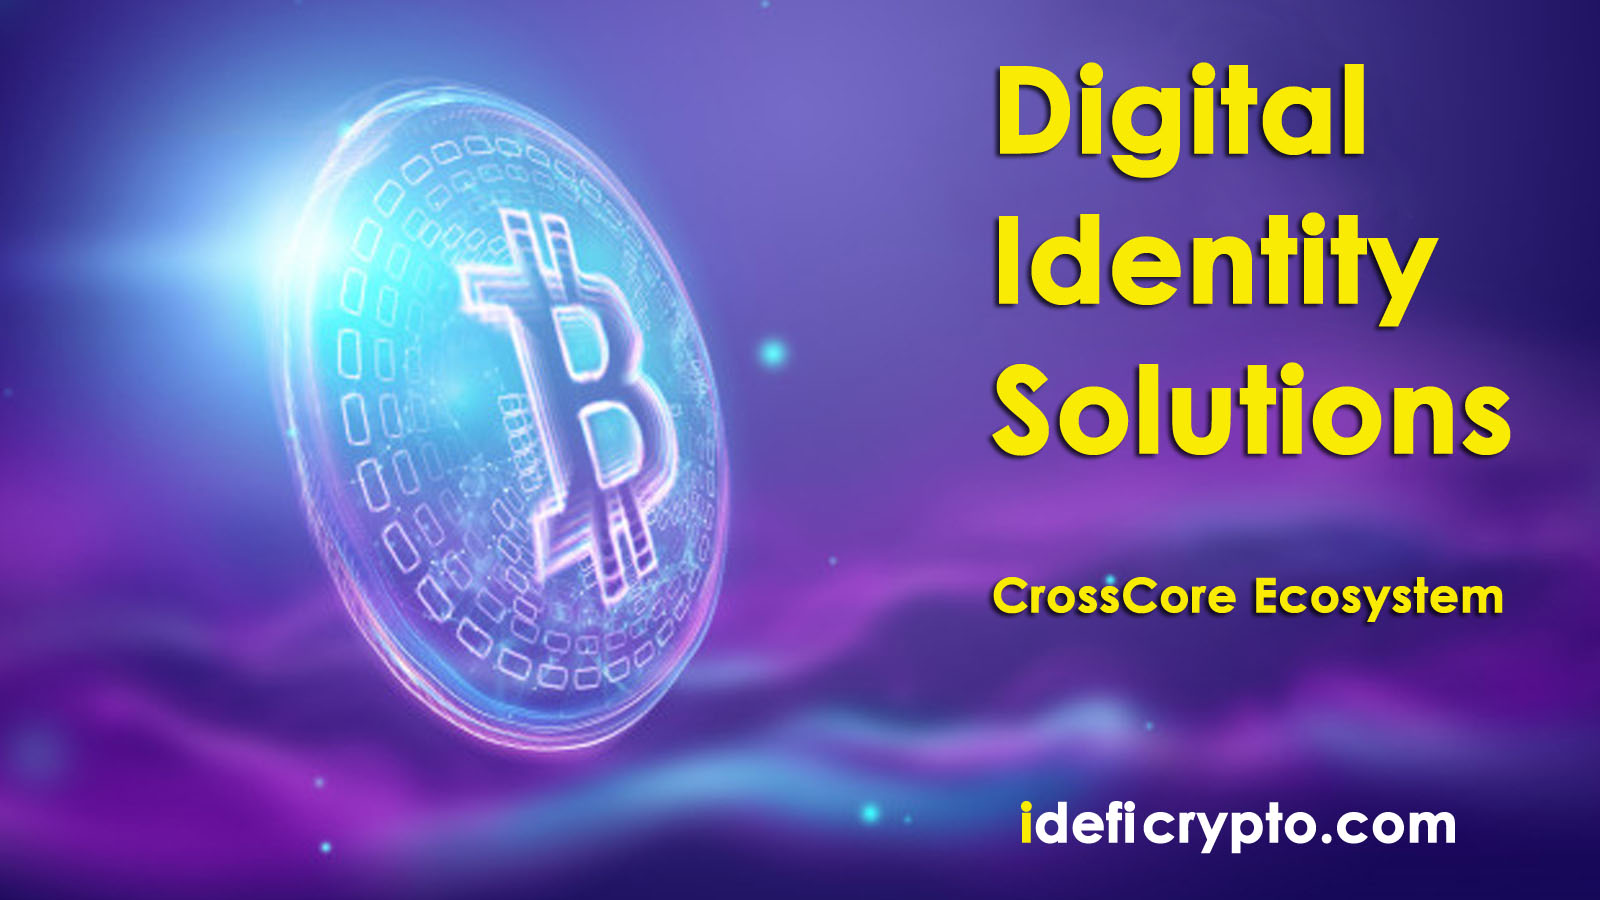 Digital identity solutions crosscore ecosystem.jpg